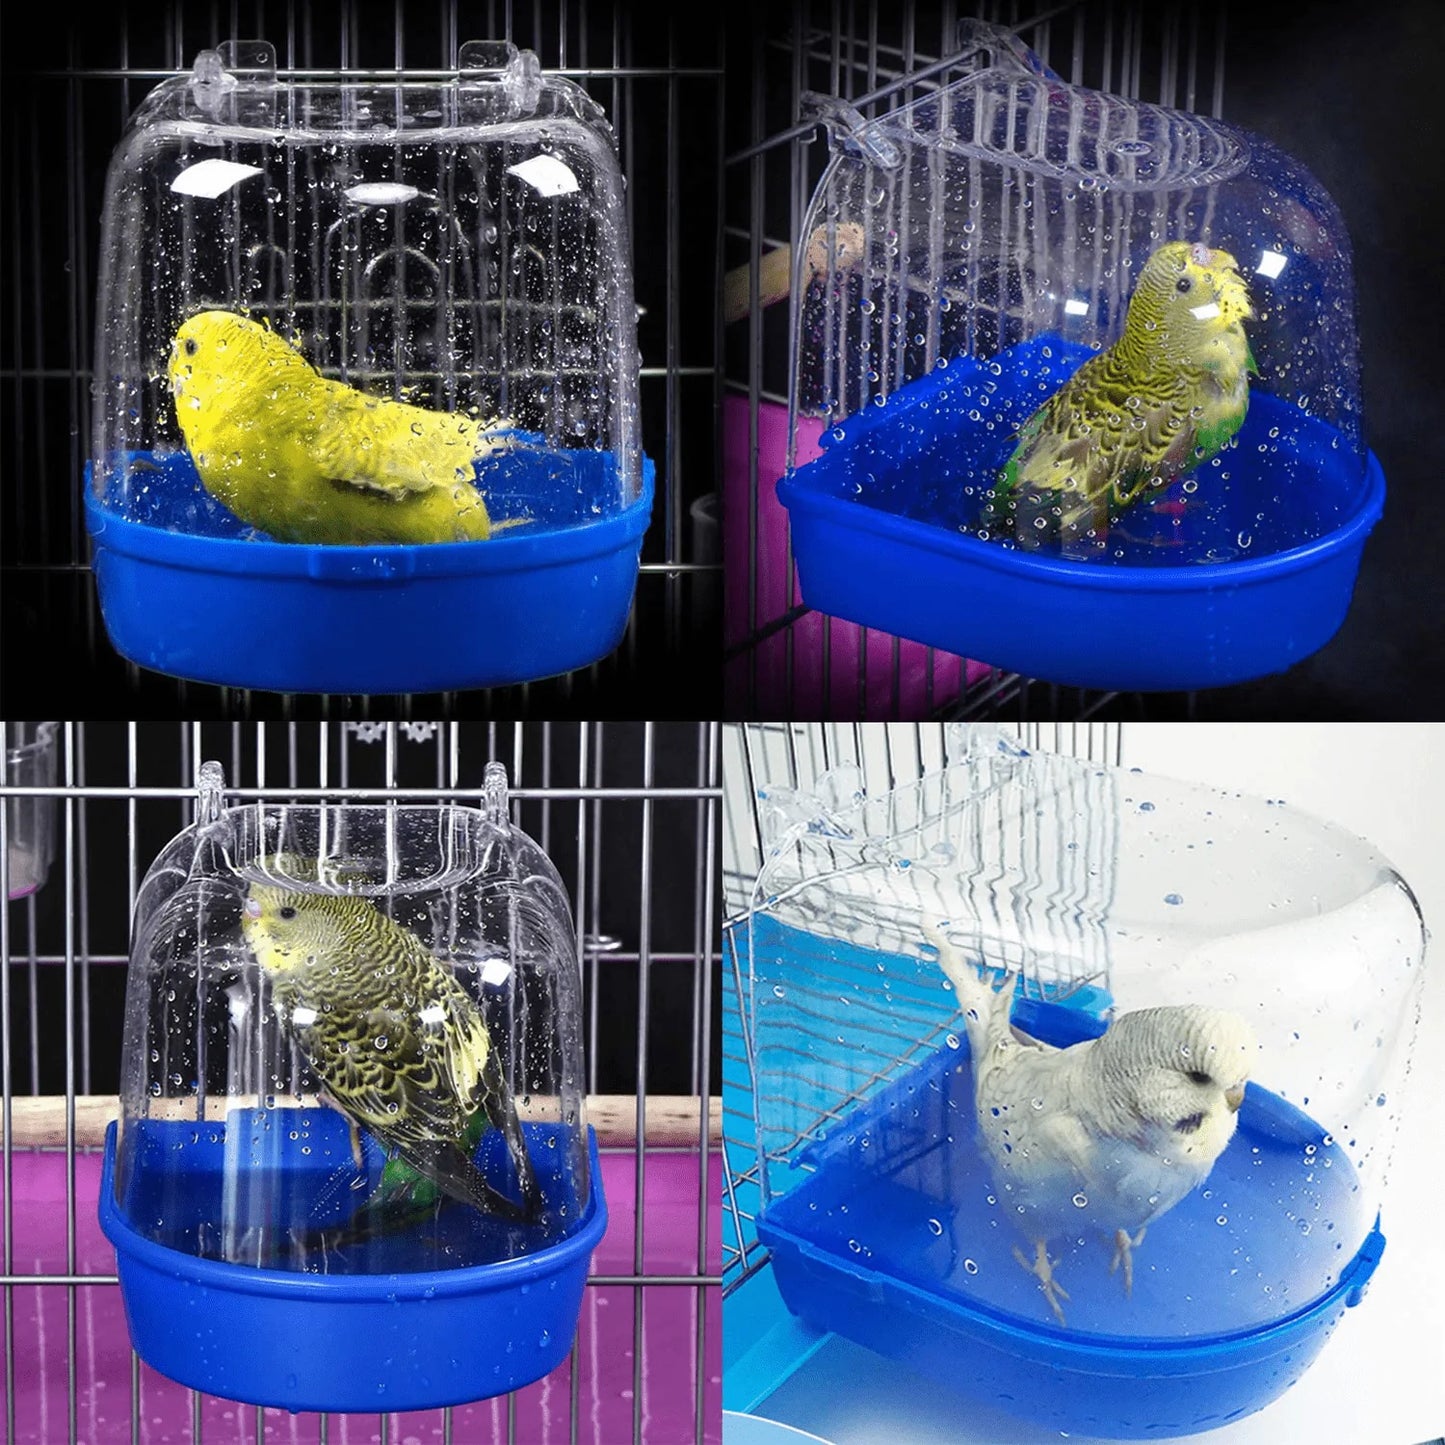 YJJKJ Caged Bird Bath Bird Cage Parrot Supplies Bathing Tub for Small Brids Canary Budgerigar Cockatiel Lovebird（Random Color） Animals & Pet Supplies > Pet Supplies > Bird Supplies > Bird Cage Accessories YJJKJ   